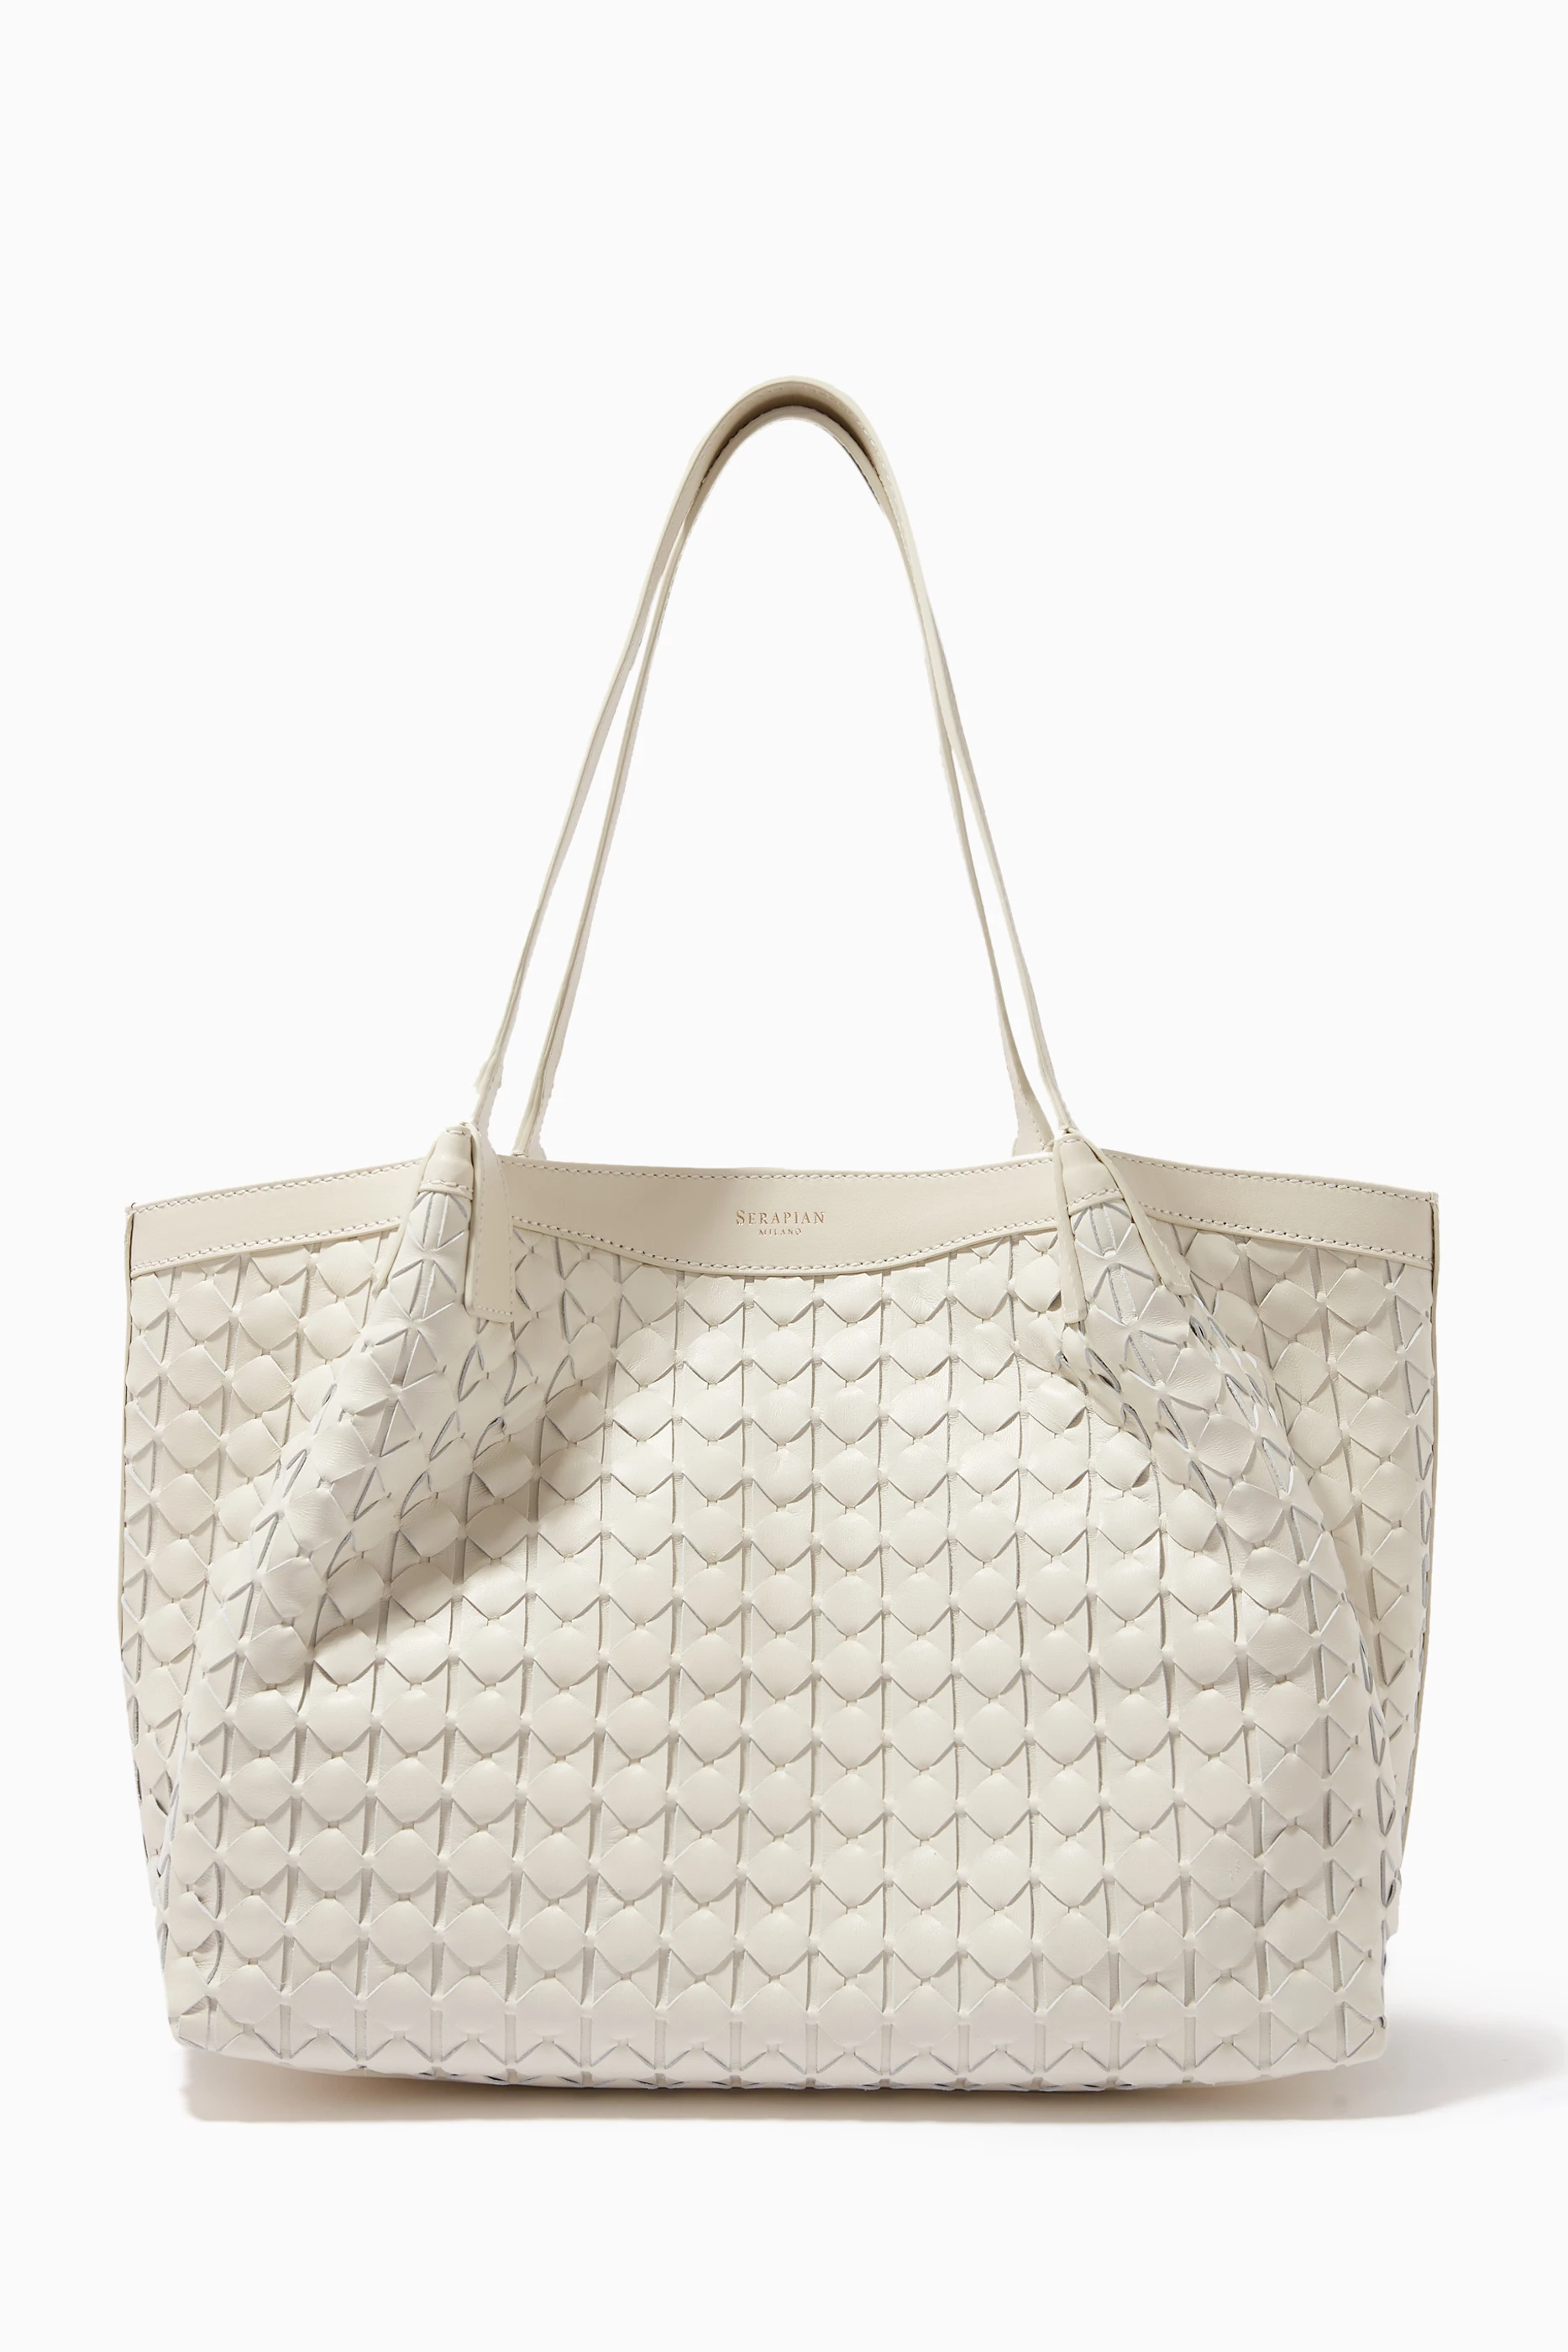 Serapian Secret Tote Bag in Mosaico, Woman, Off-White